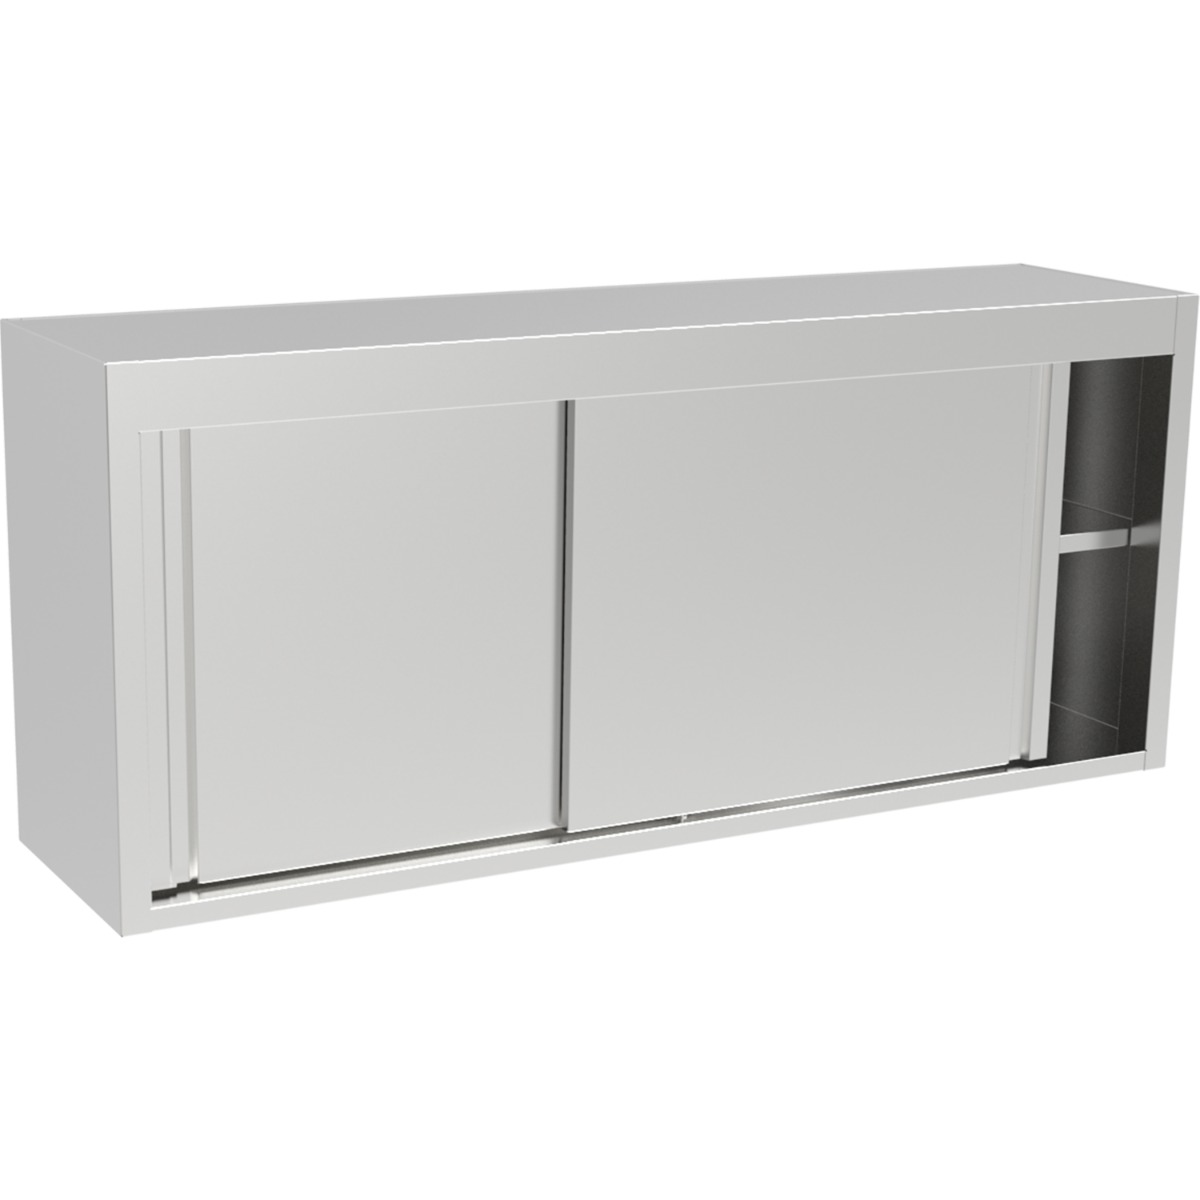 INOMAK Wall mounted storage cupboard 1600mm Wide - ET316A